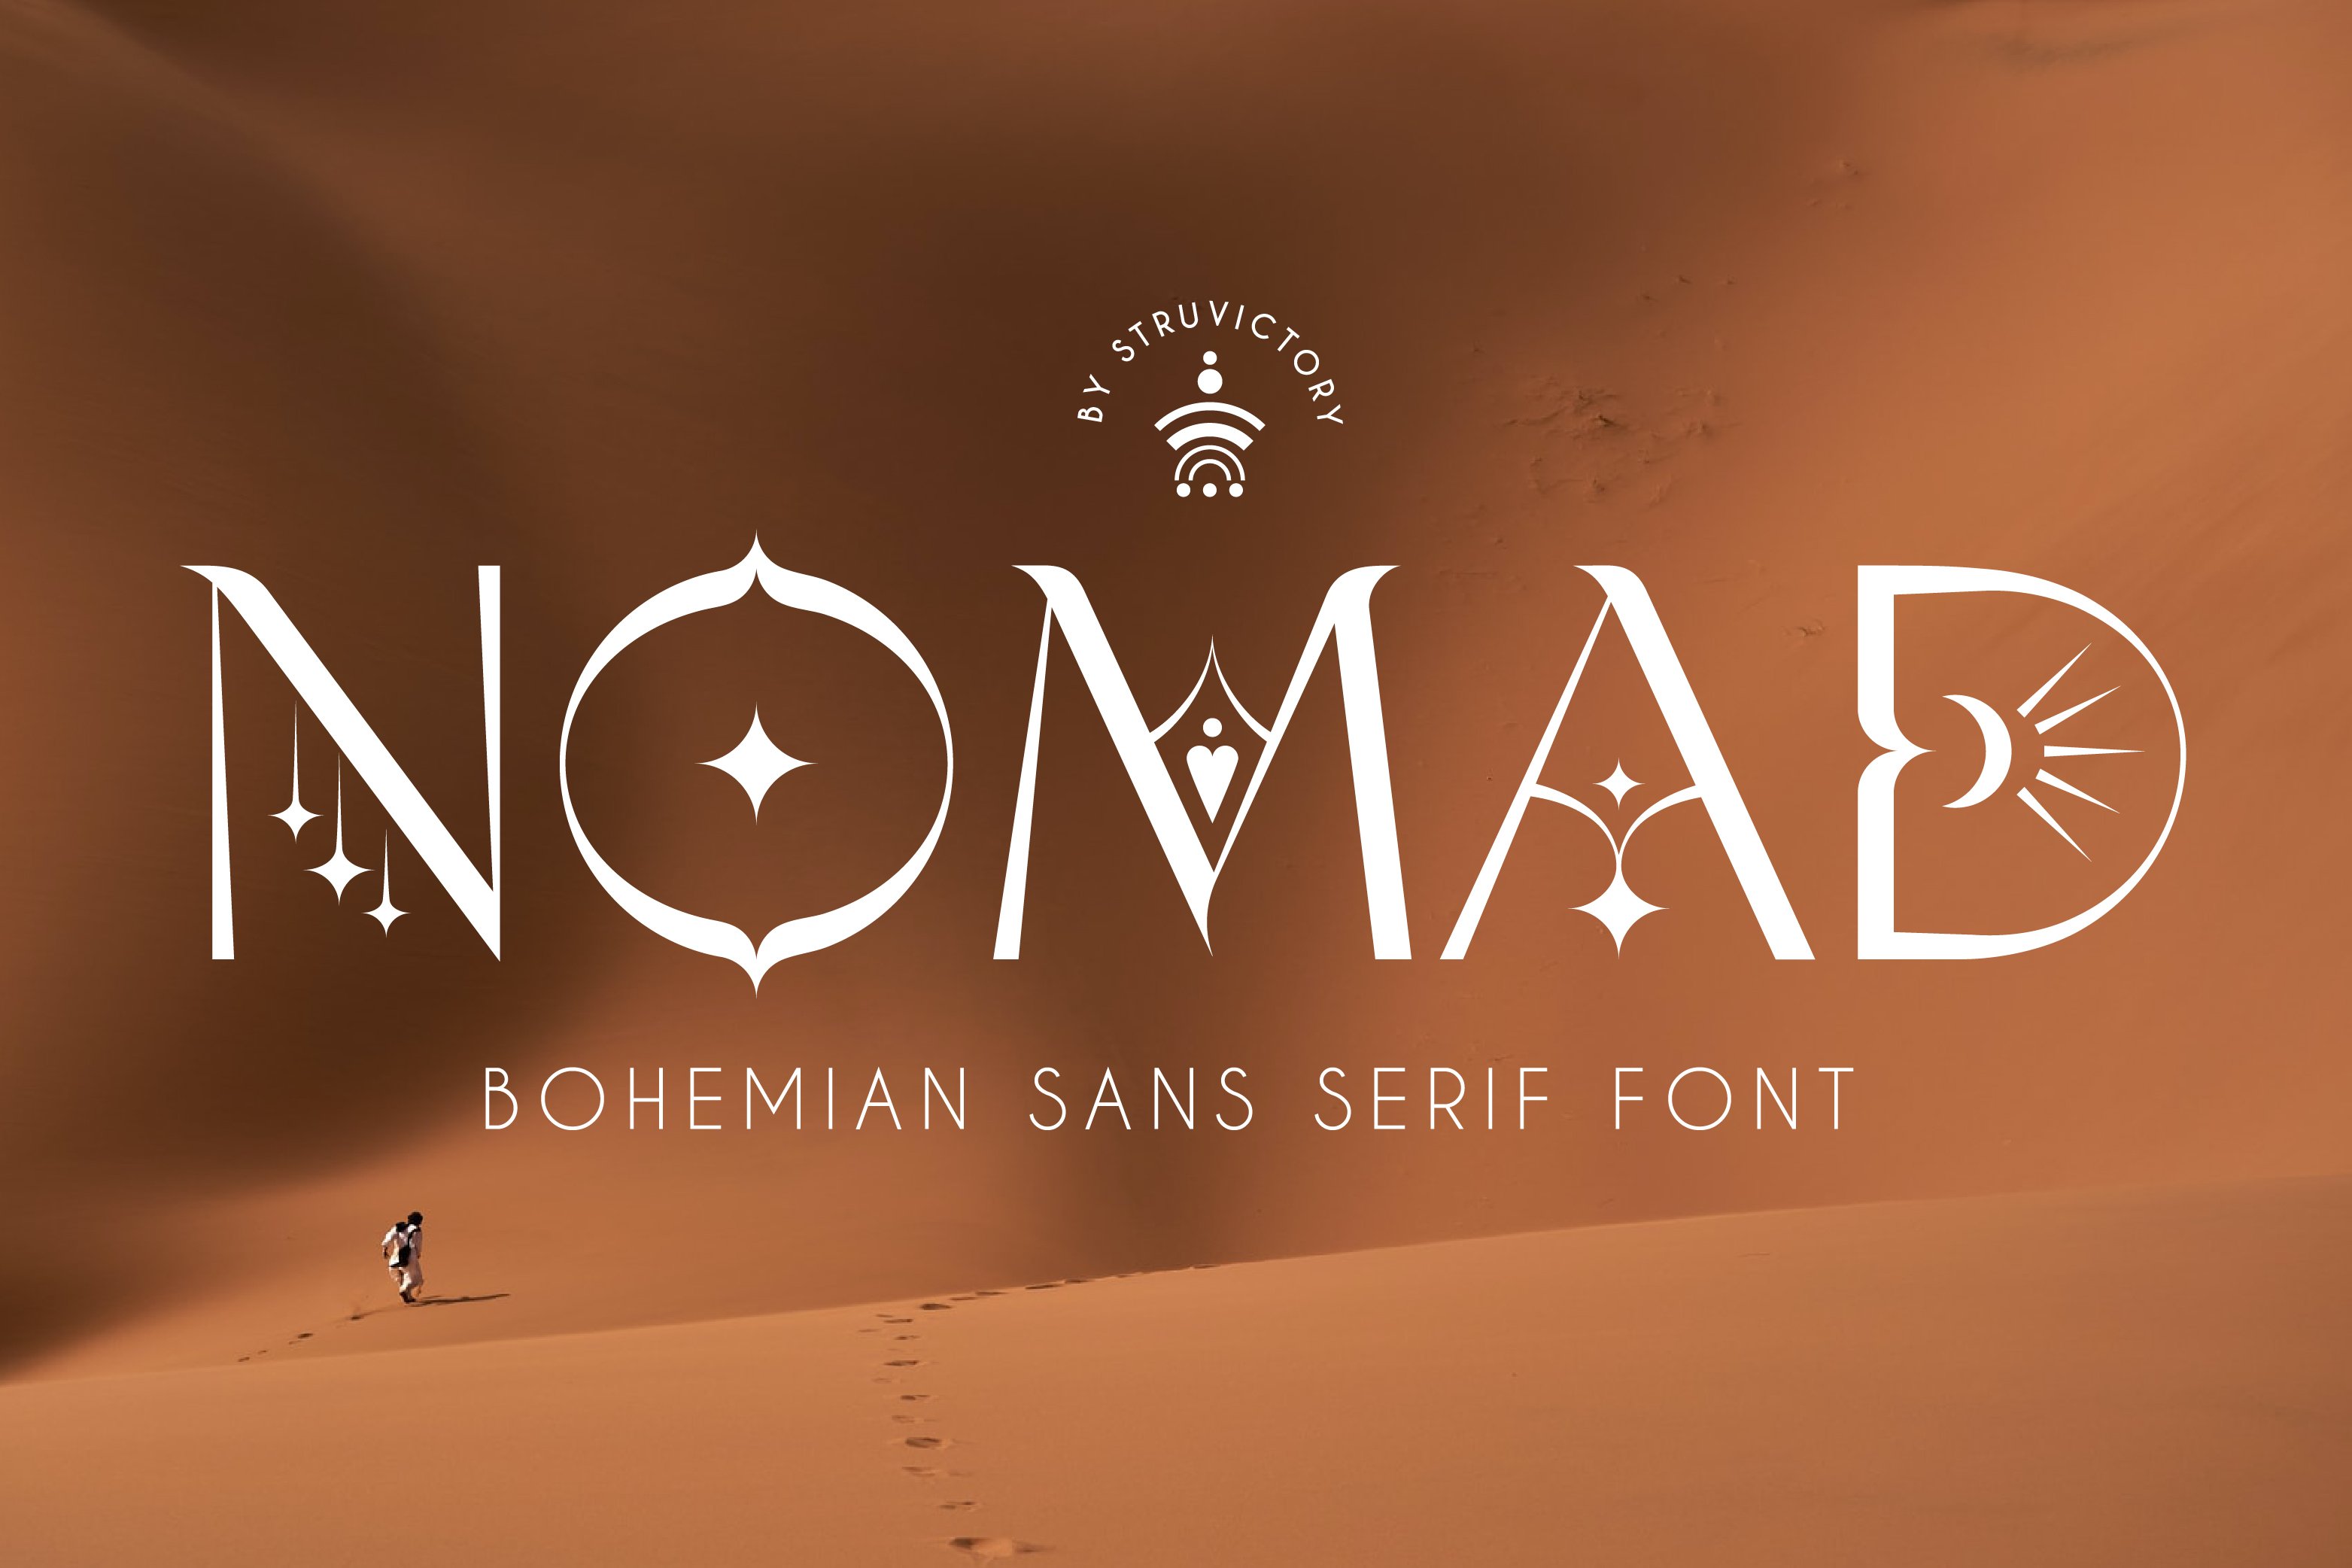 Nomad - Bohemian Sans Serif Font cover image.